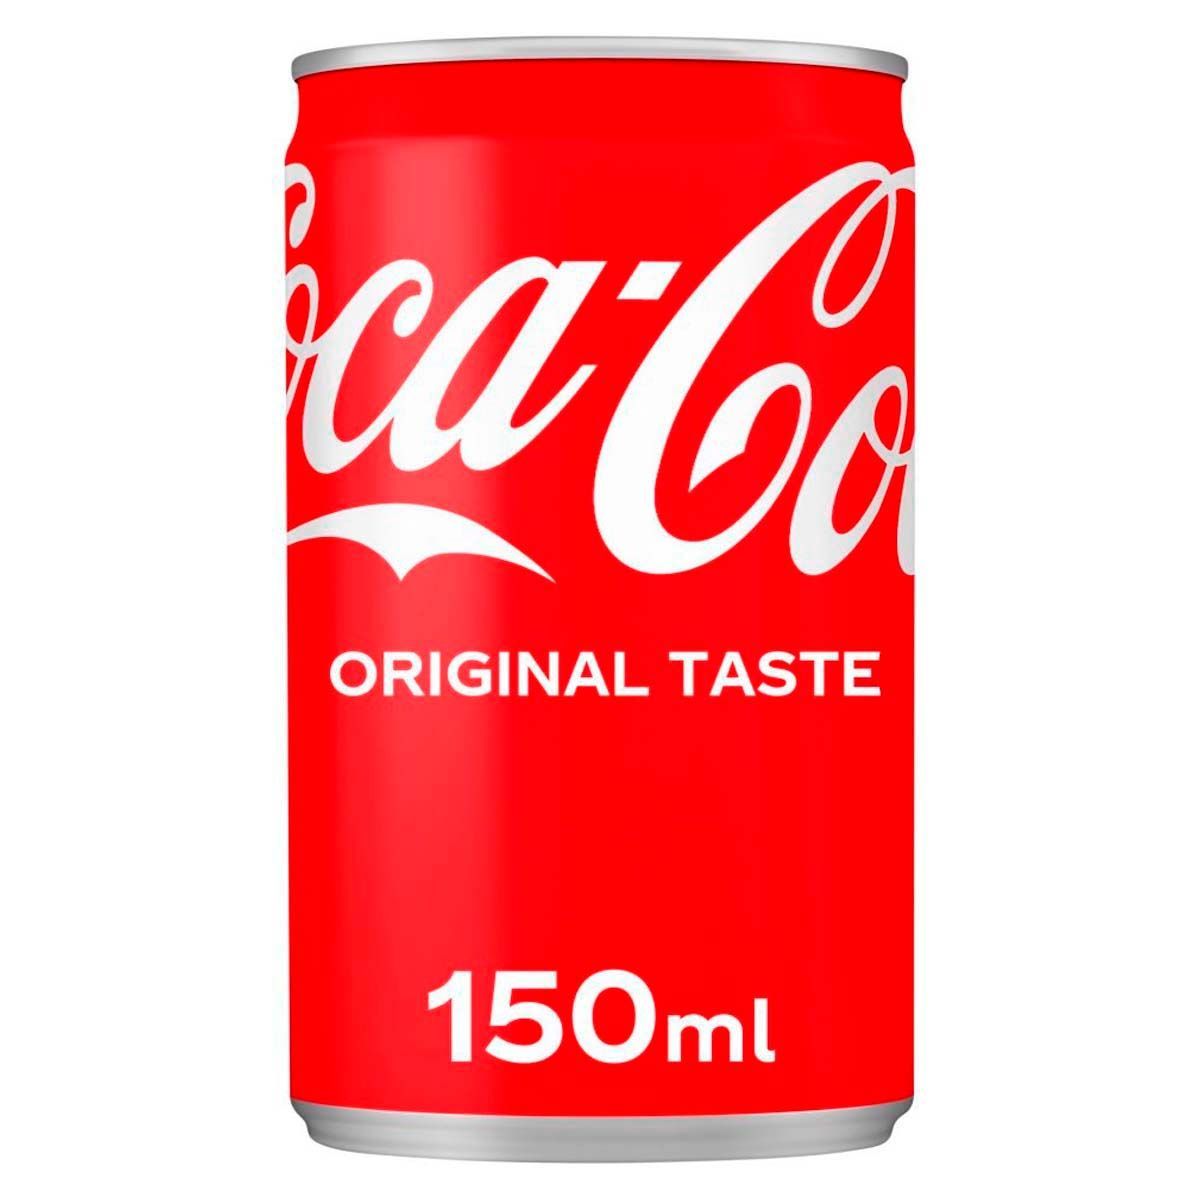 Купить колу оригинал. Кока-кола 150 мл. Кока кола Original taste. Кока кола Классик оригинал. Coca Cola Original taste Железный 250 ml.